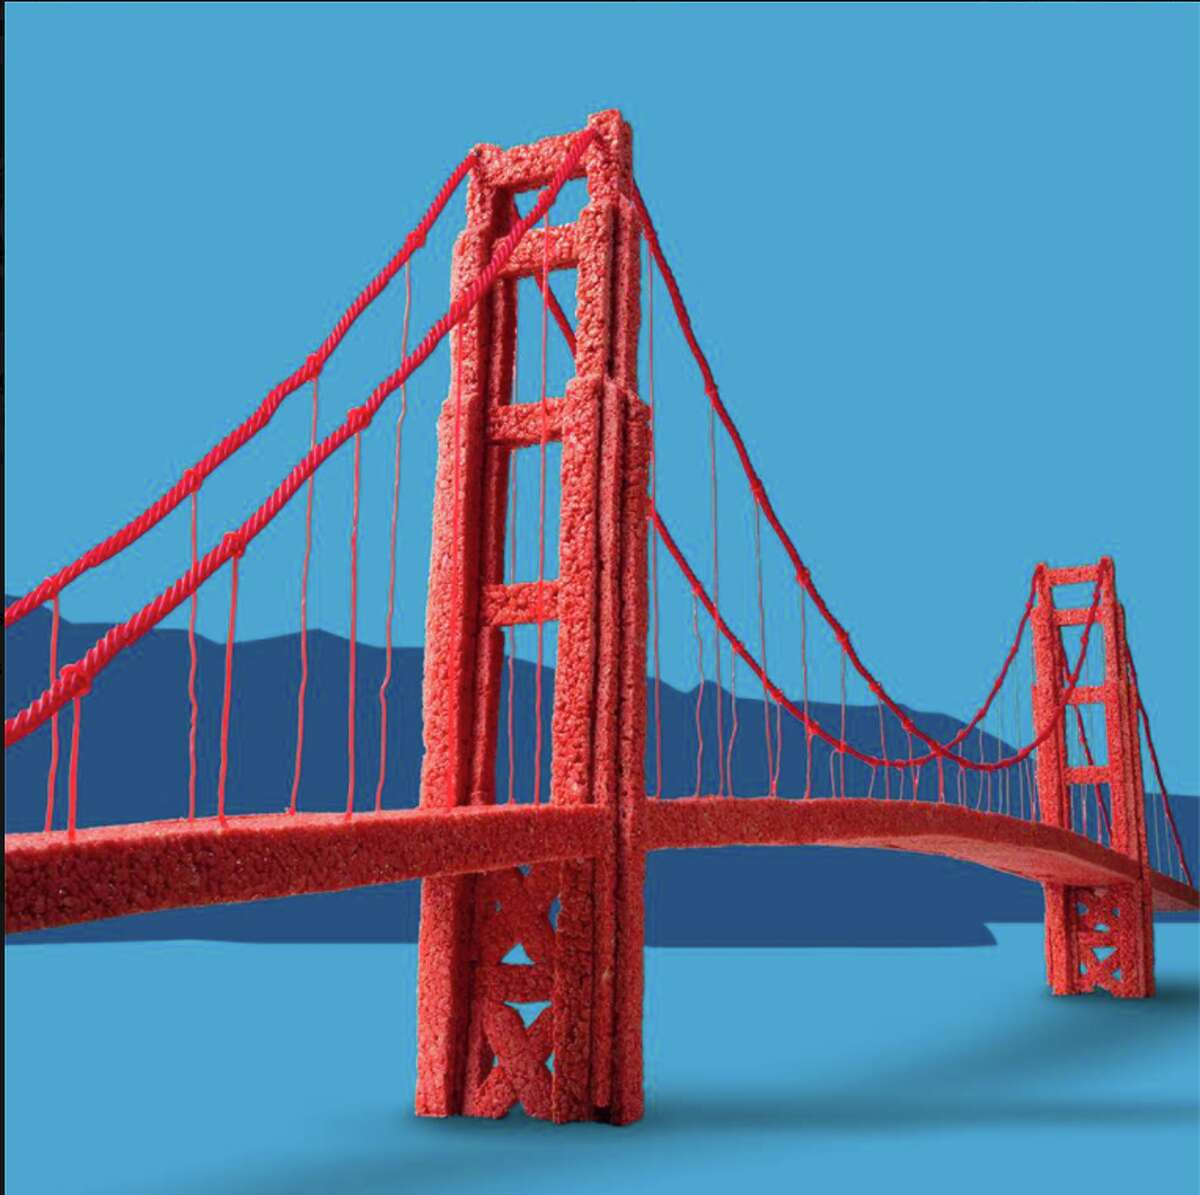 Kellogg's Rice Krispies recreated the Golden Gate Bridge with their famous 'original treats.'